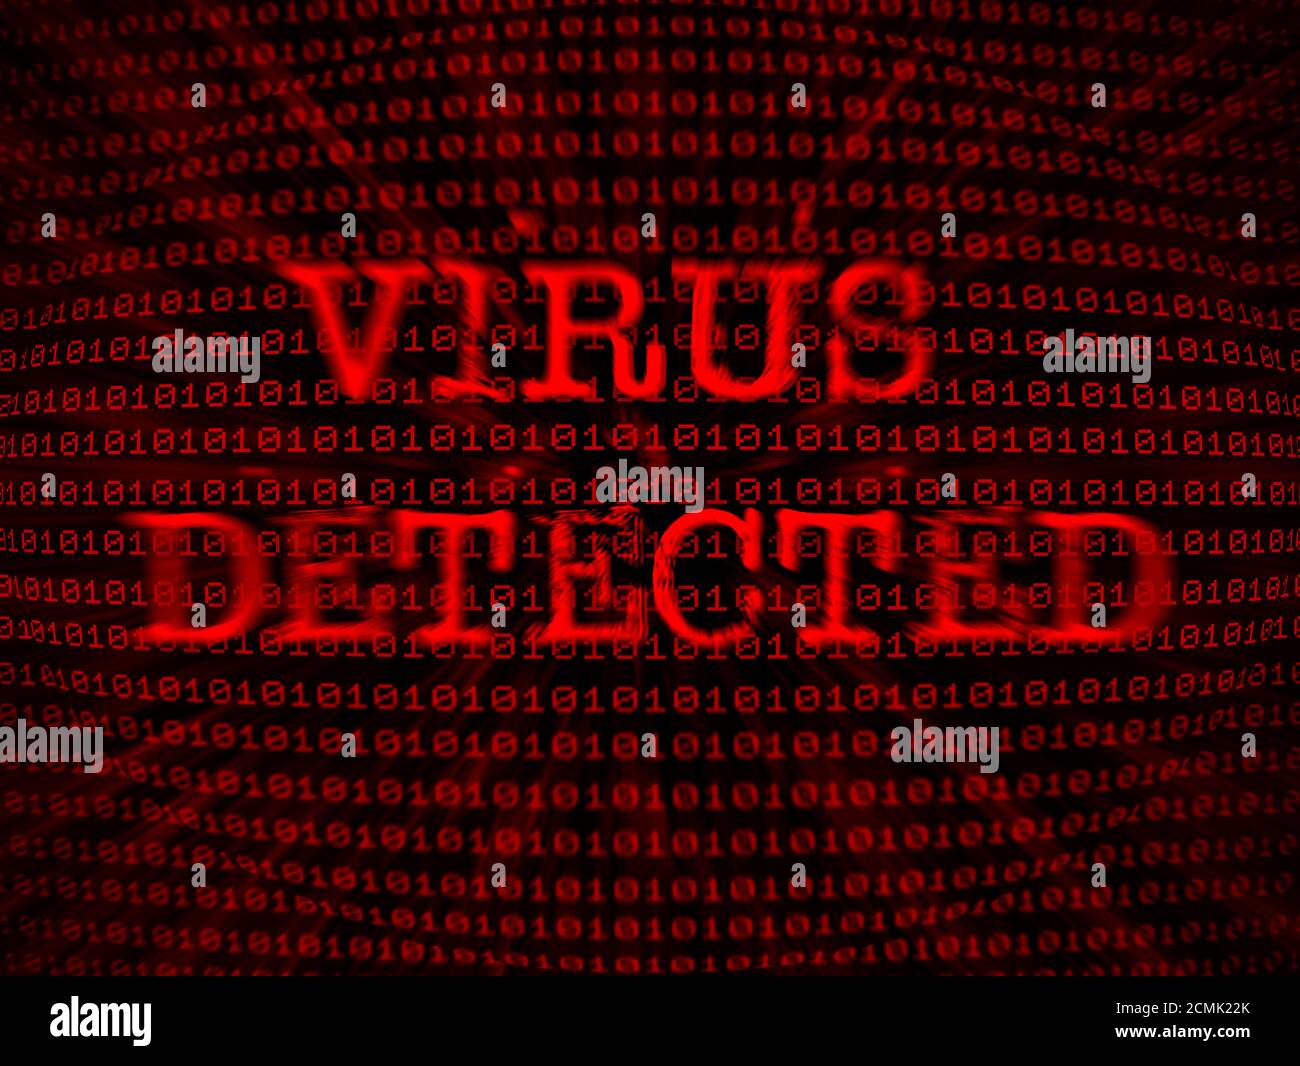 Virus Detected written on computer screen Stock Photo